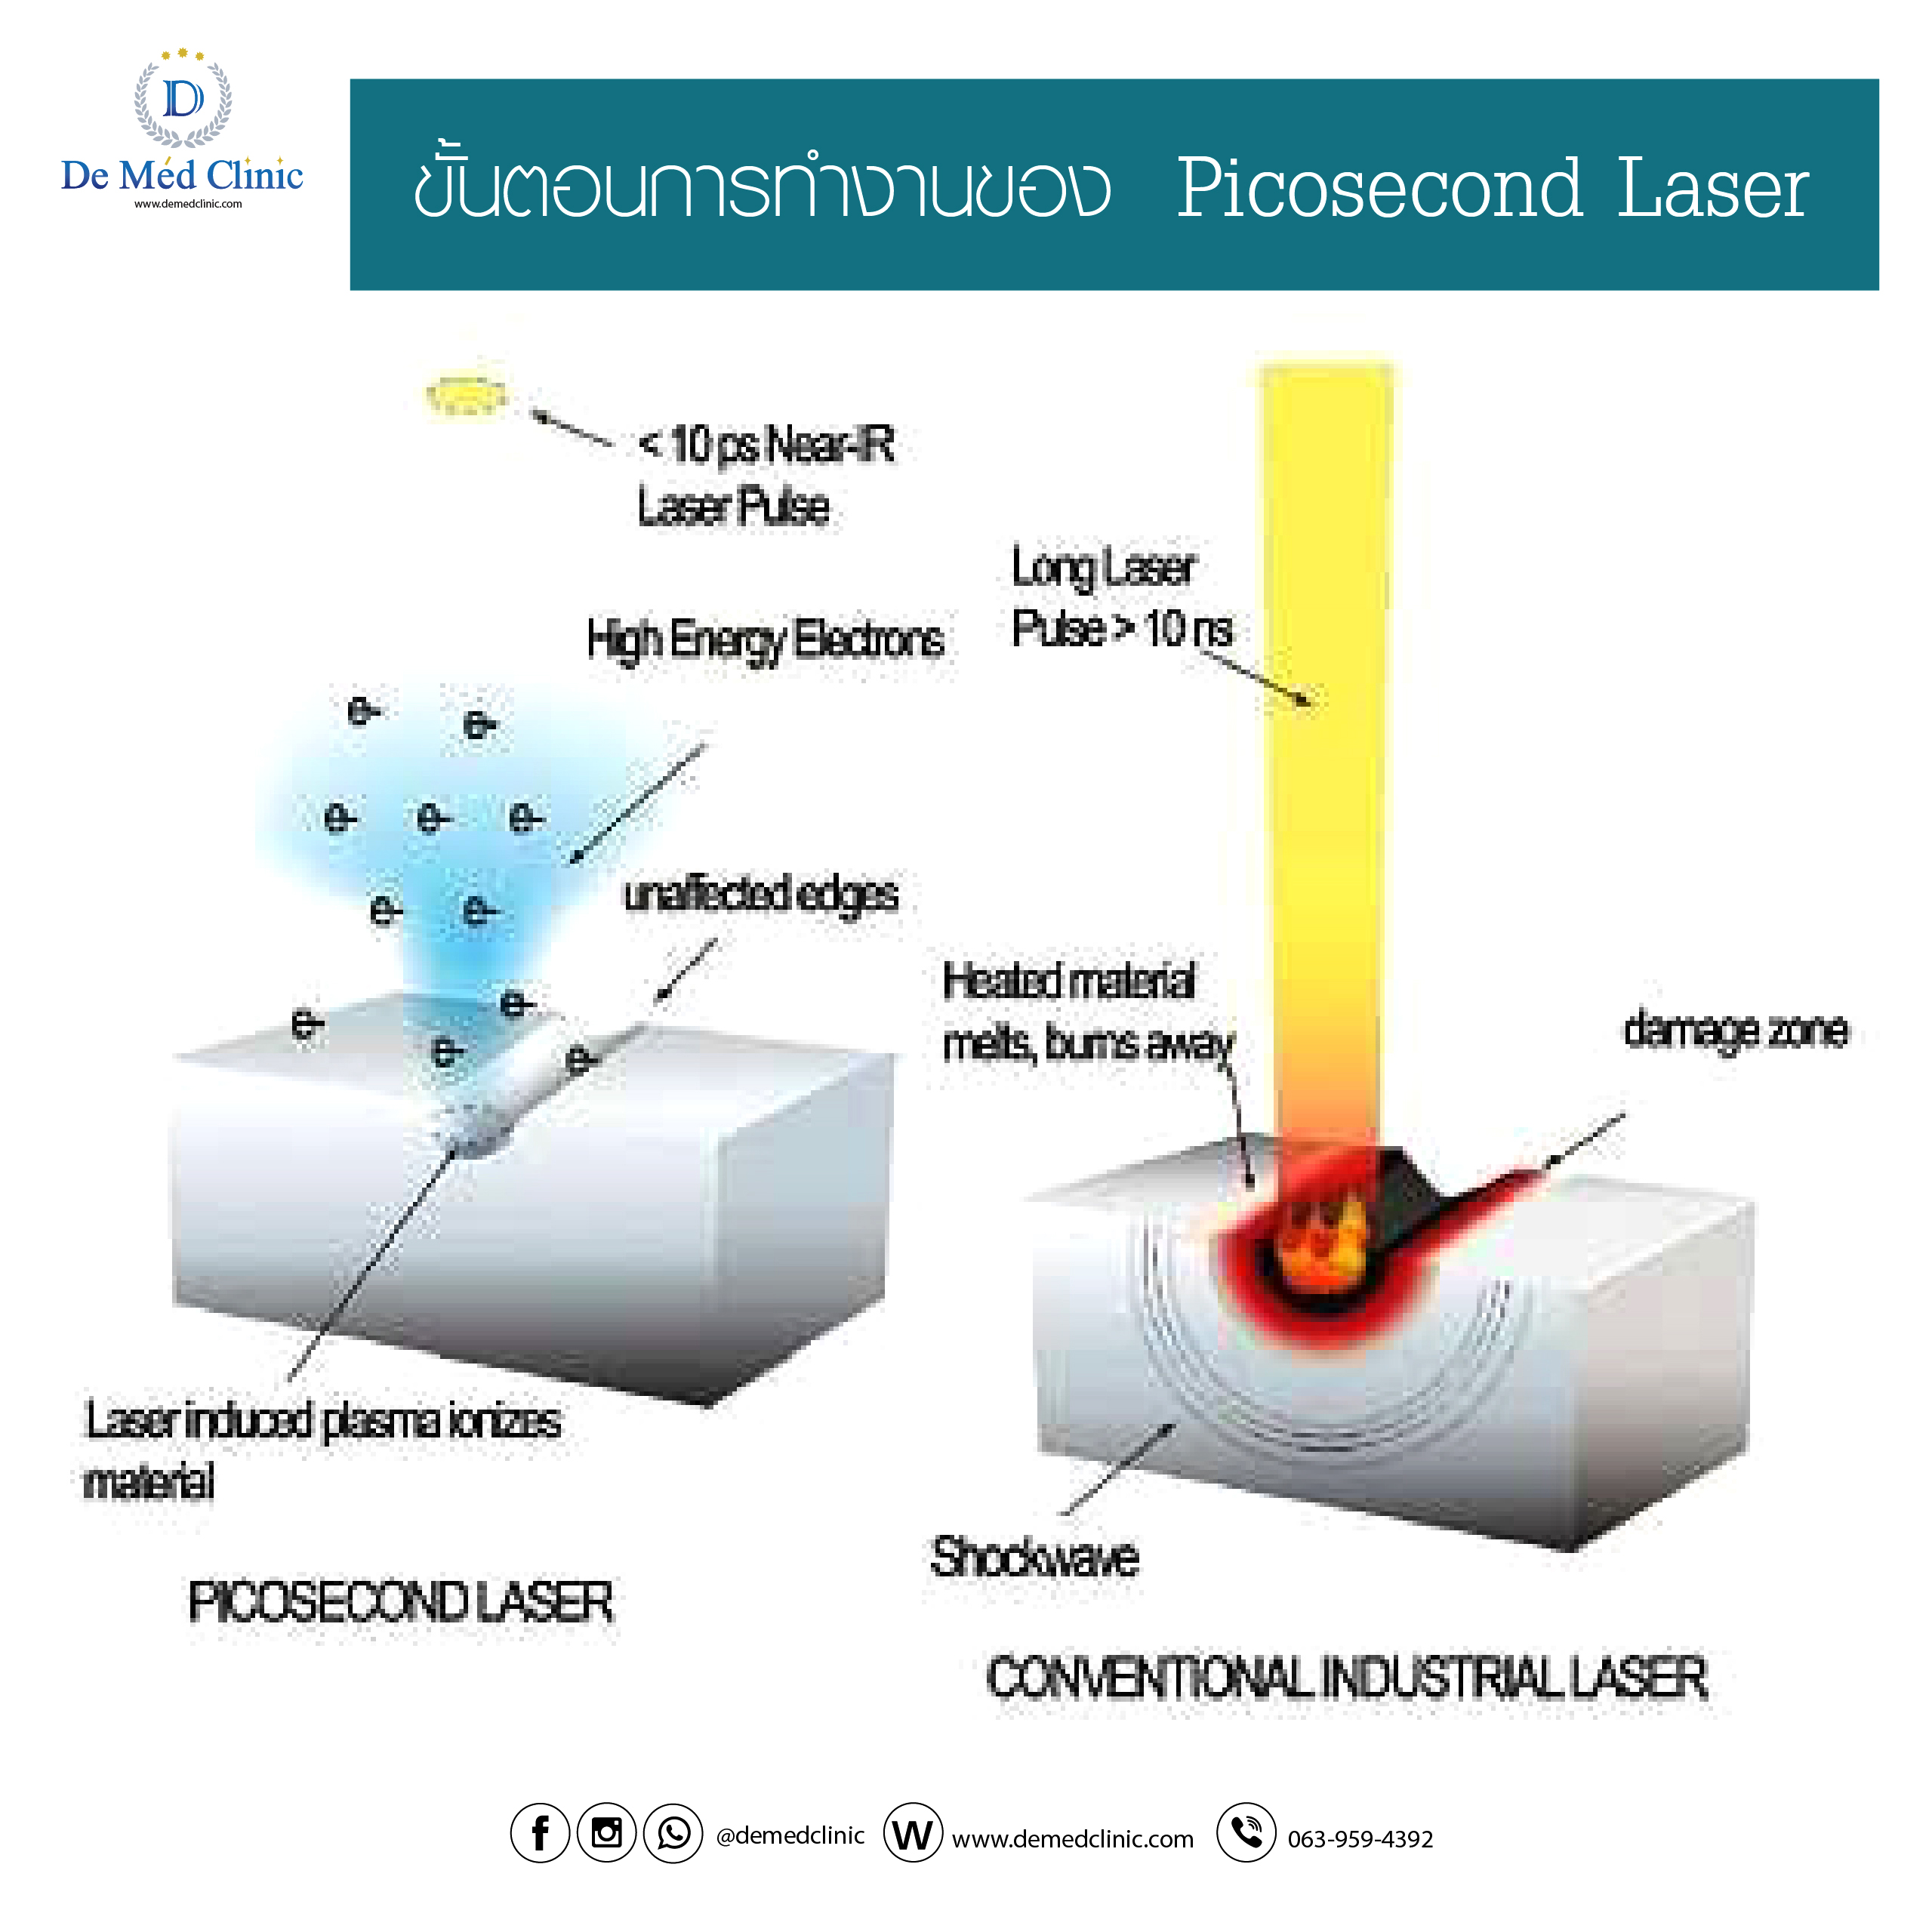 Picosecond Laser เทคโนโลยีใหม่ล่าสุด ช่วยจัดการปัญหา ฝ้า กระ ริ้วรอย จุดด่างดำบนใบหน้าได้อย่างมีประสิทธิภาพ